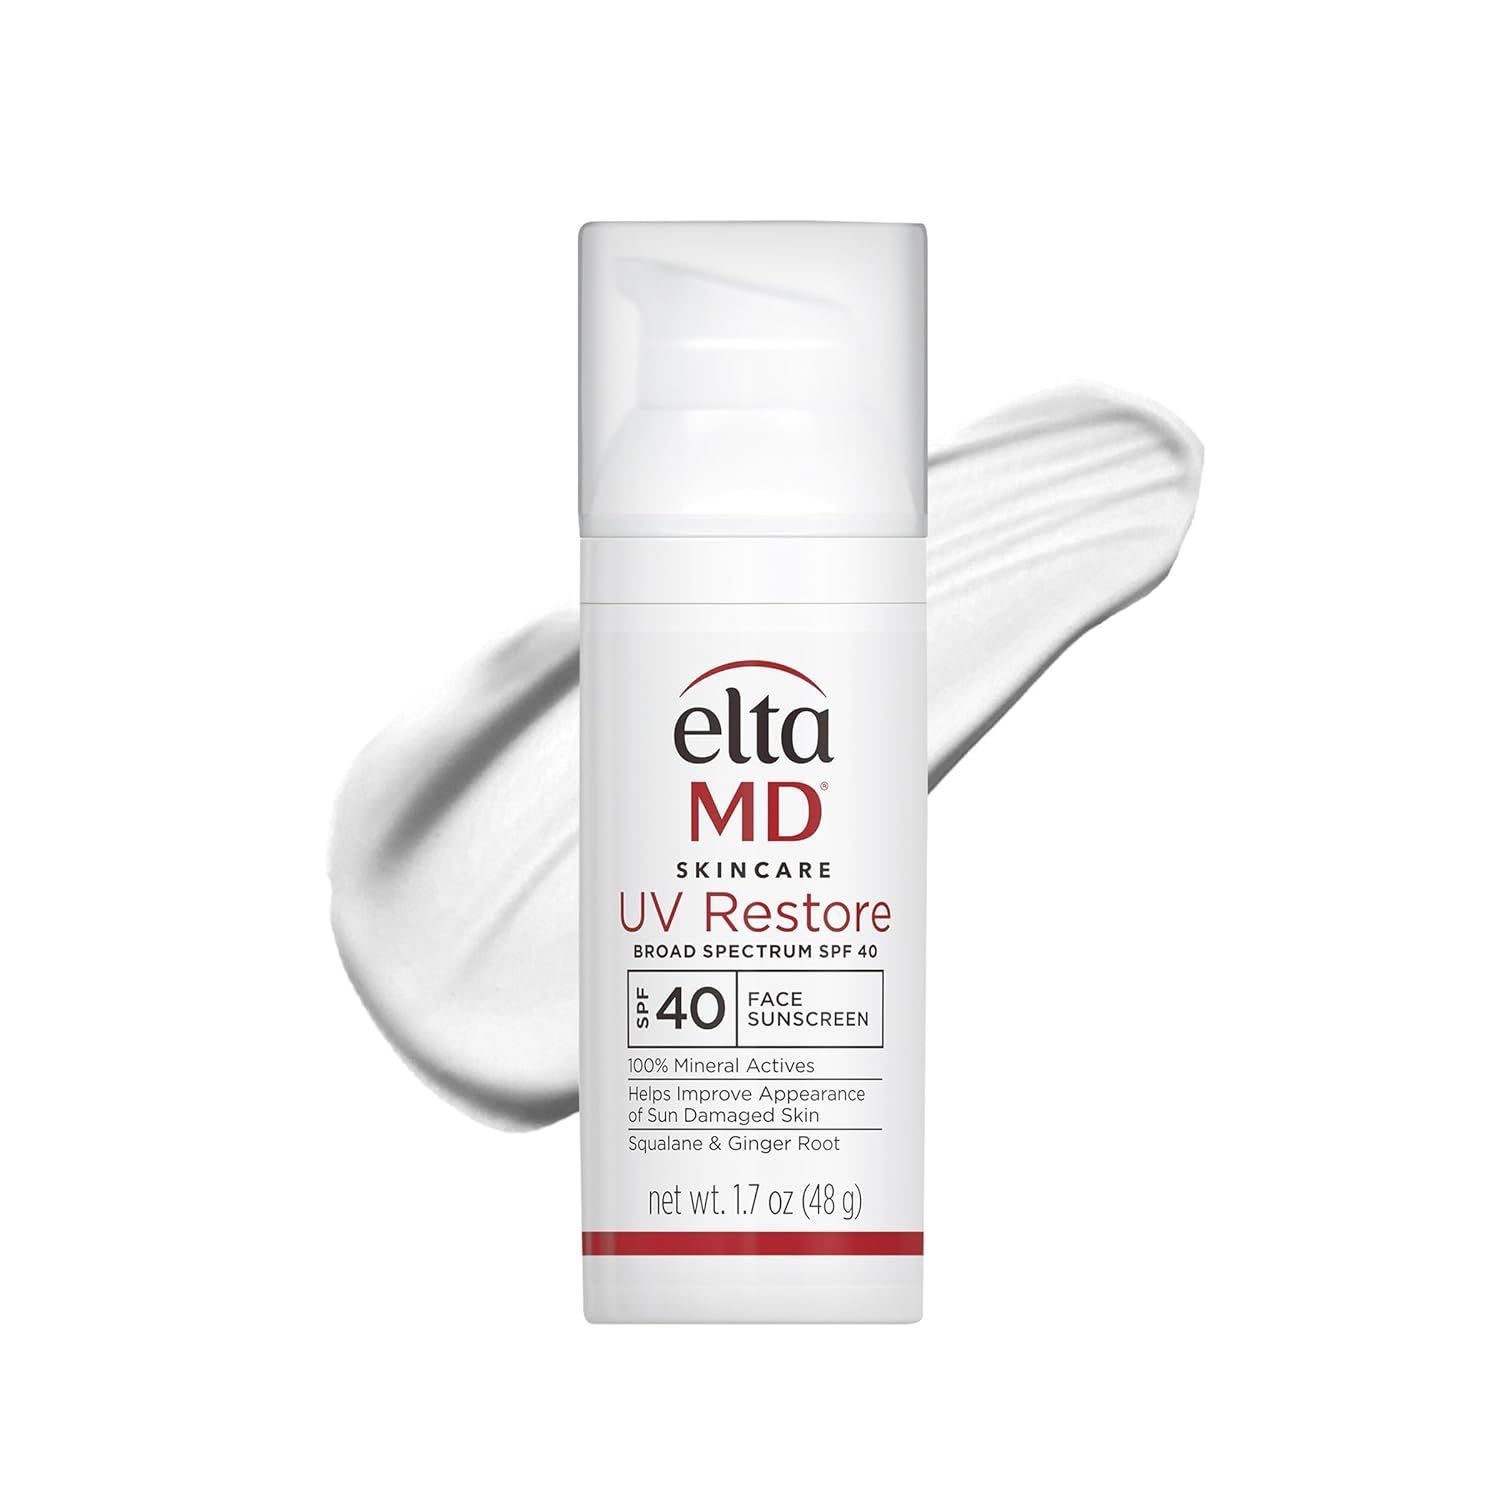 A bottle of elta md uv restore sunscreen